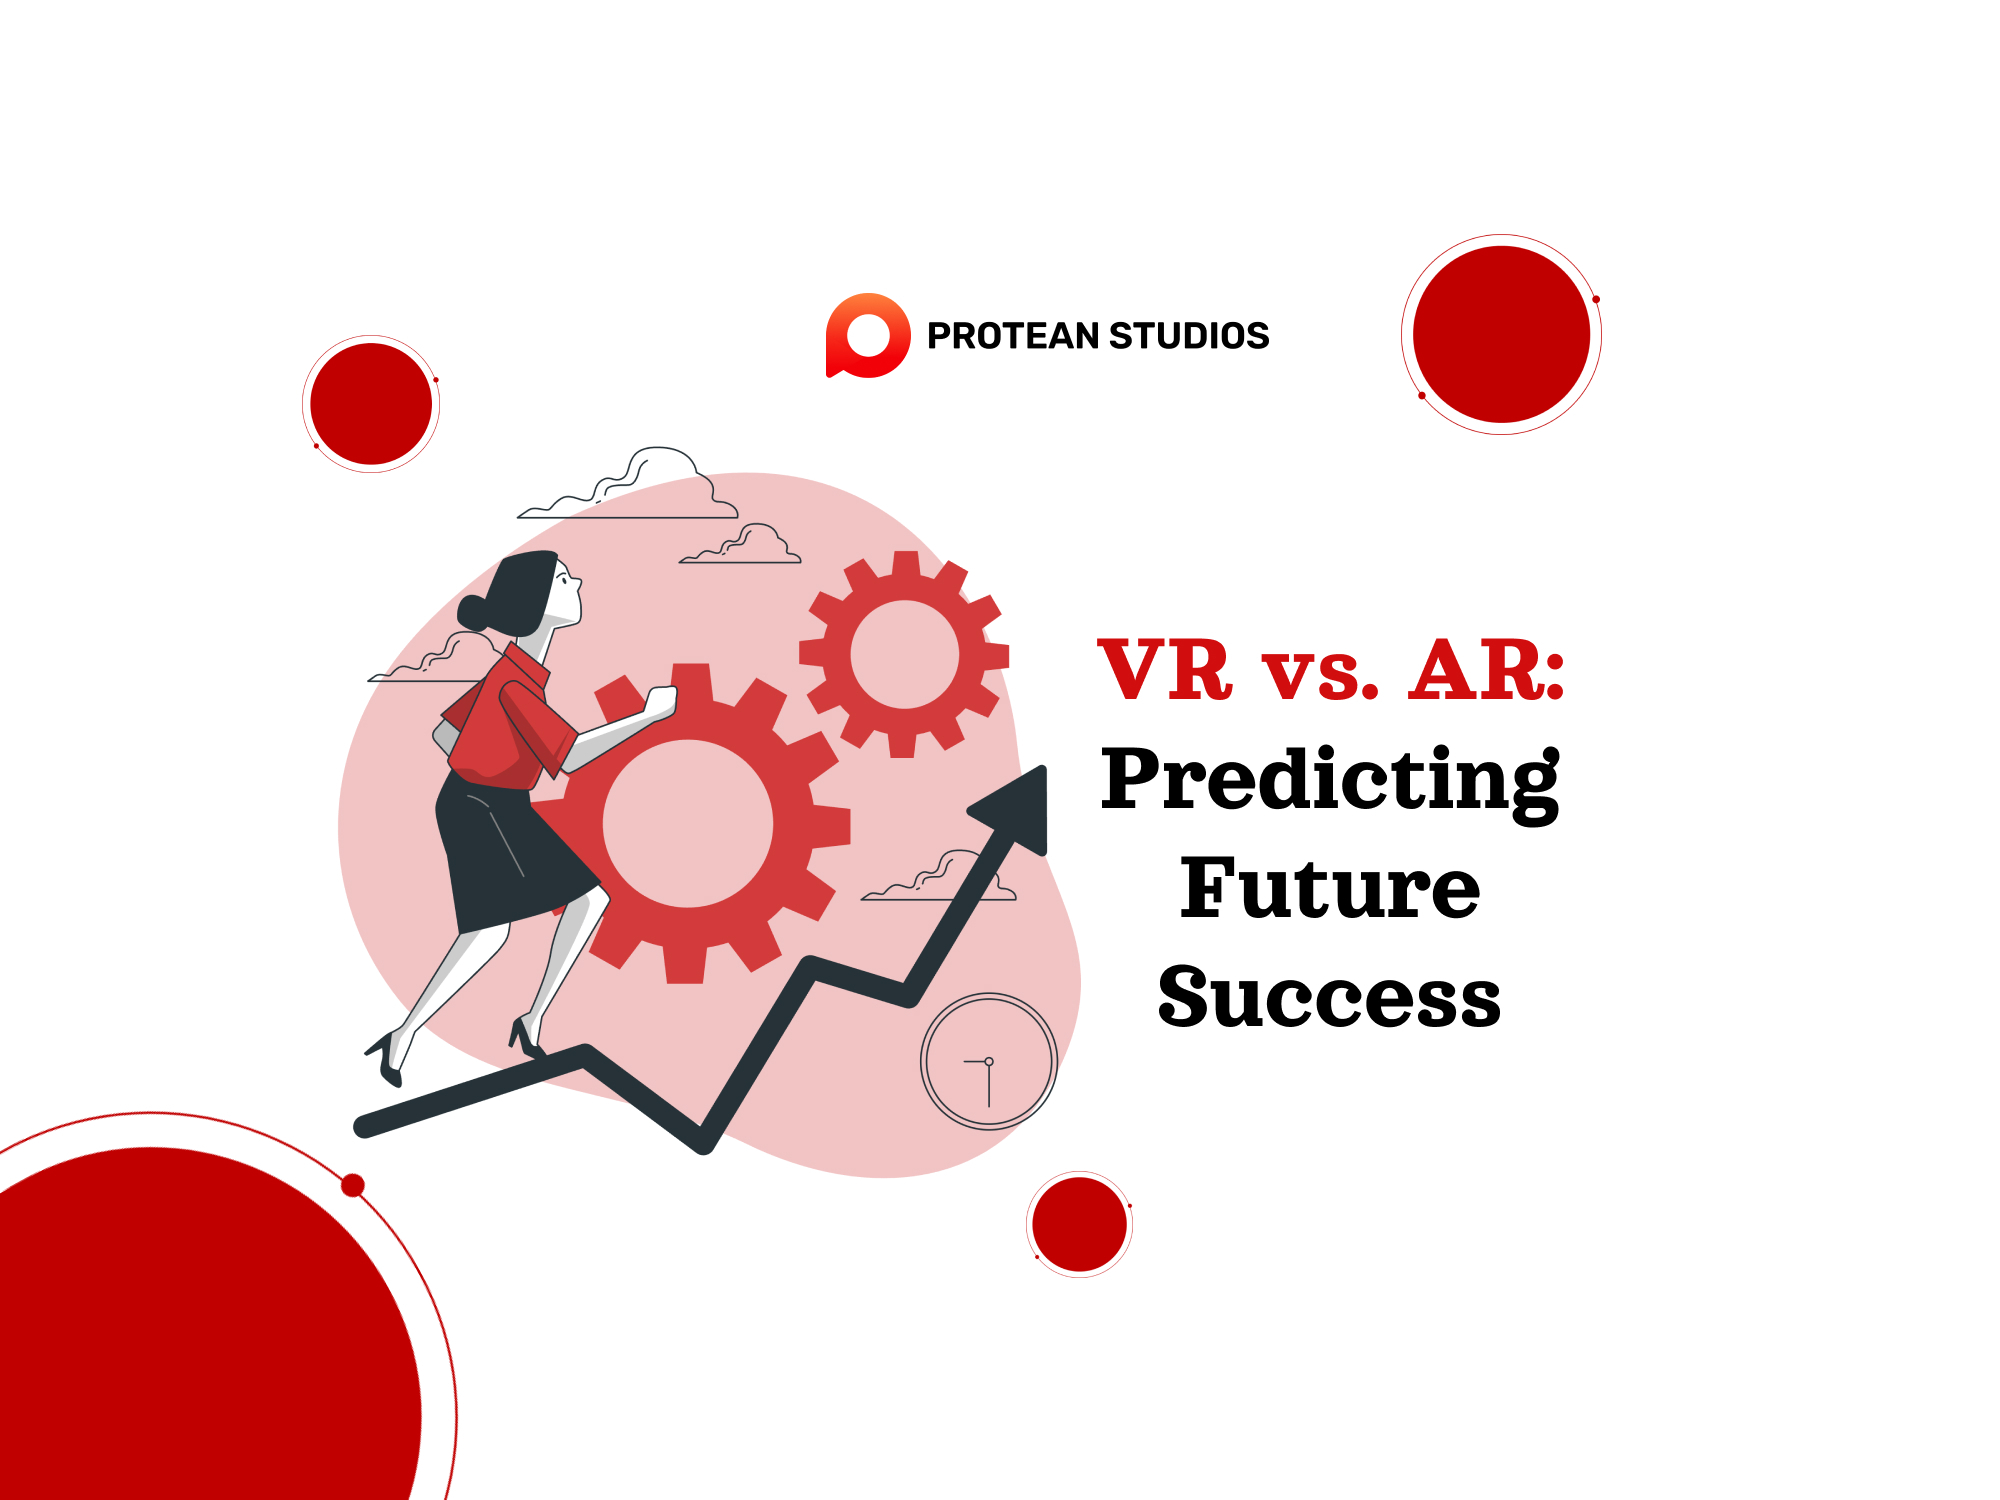 VR (Virtual Reality) vs. AR (Augmented Reality): Predicting Future Success